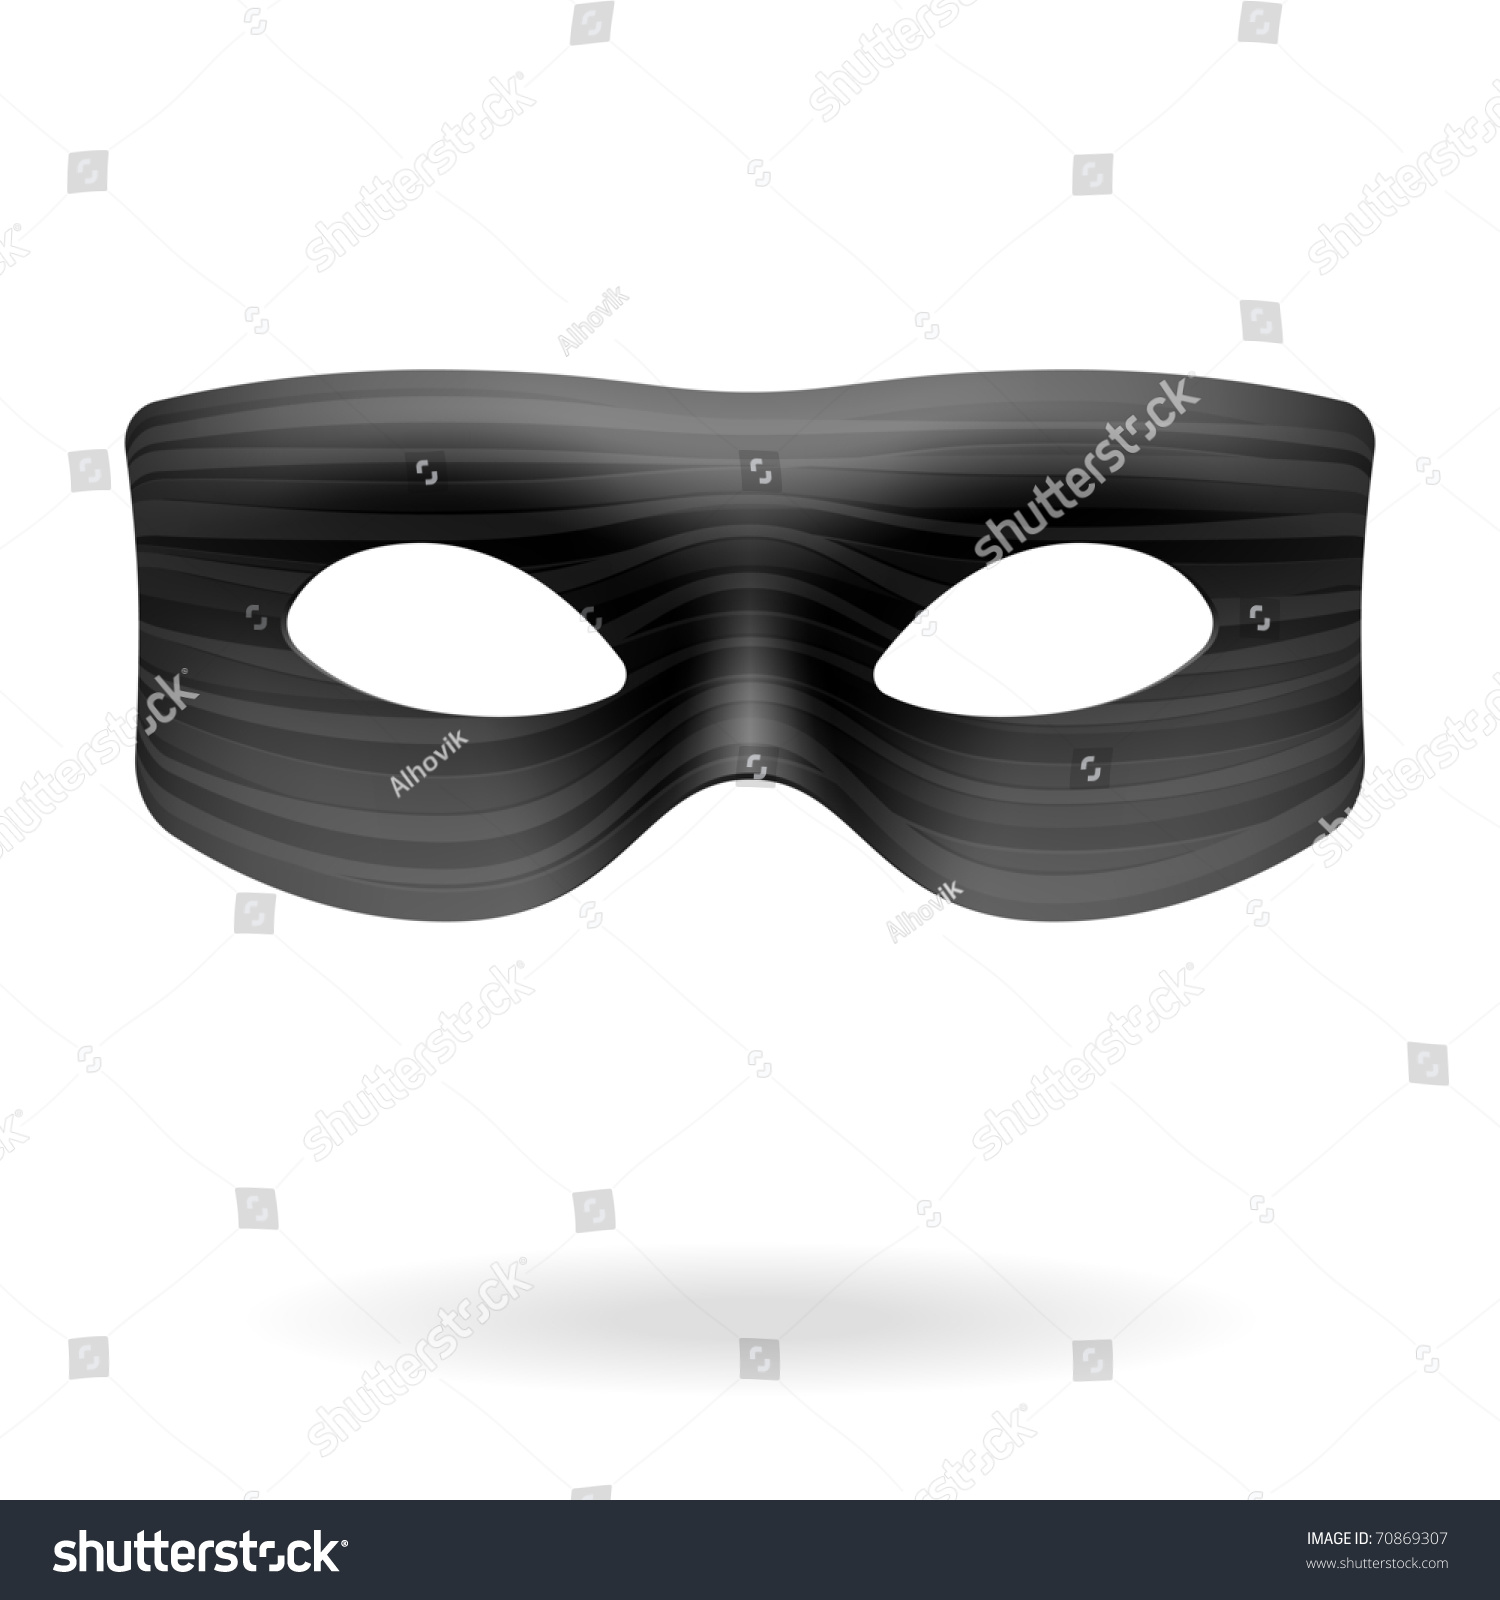 Zorro Mask Vector Stock Vector 70869307 - Shutterstock